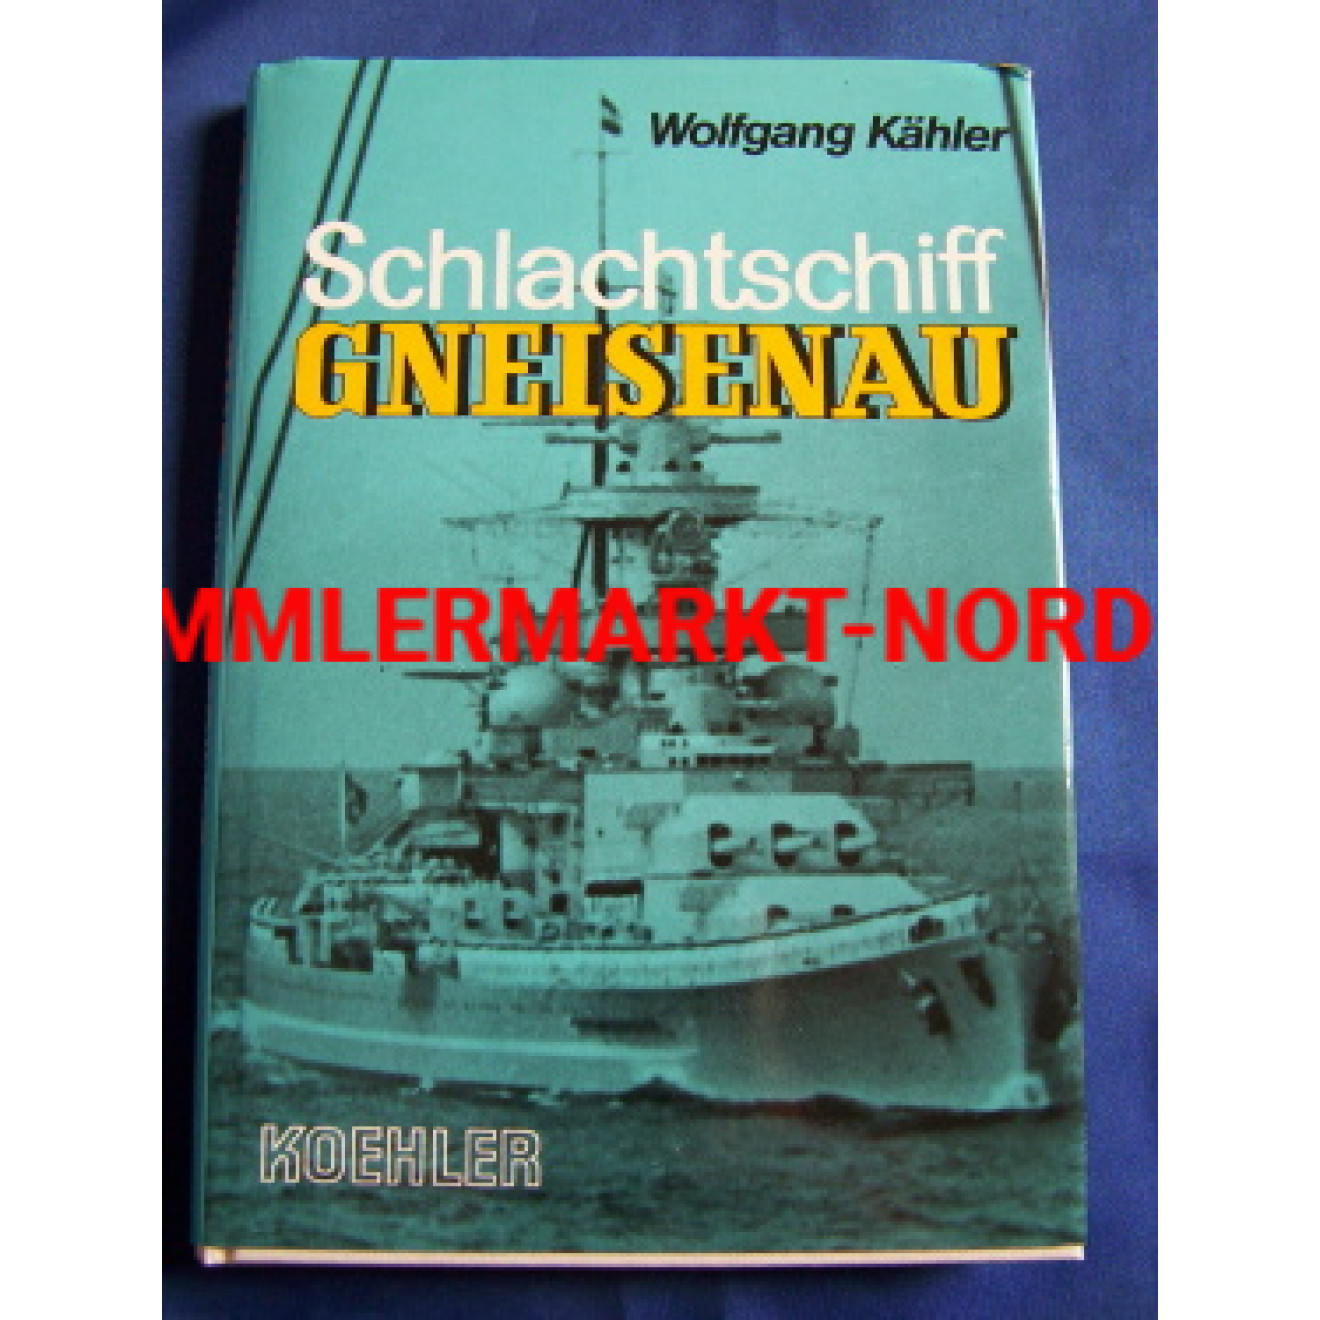 Battle ship Gneisenau